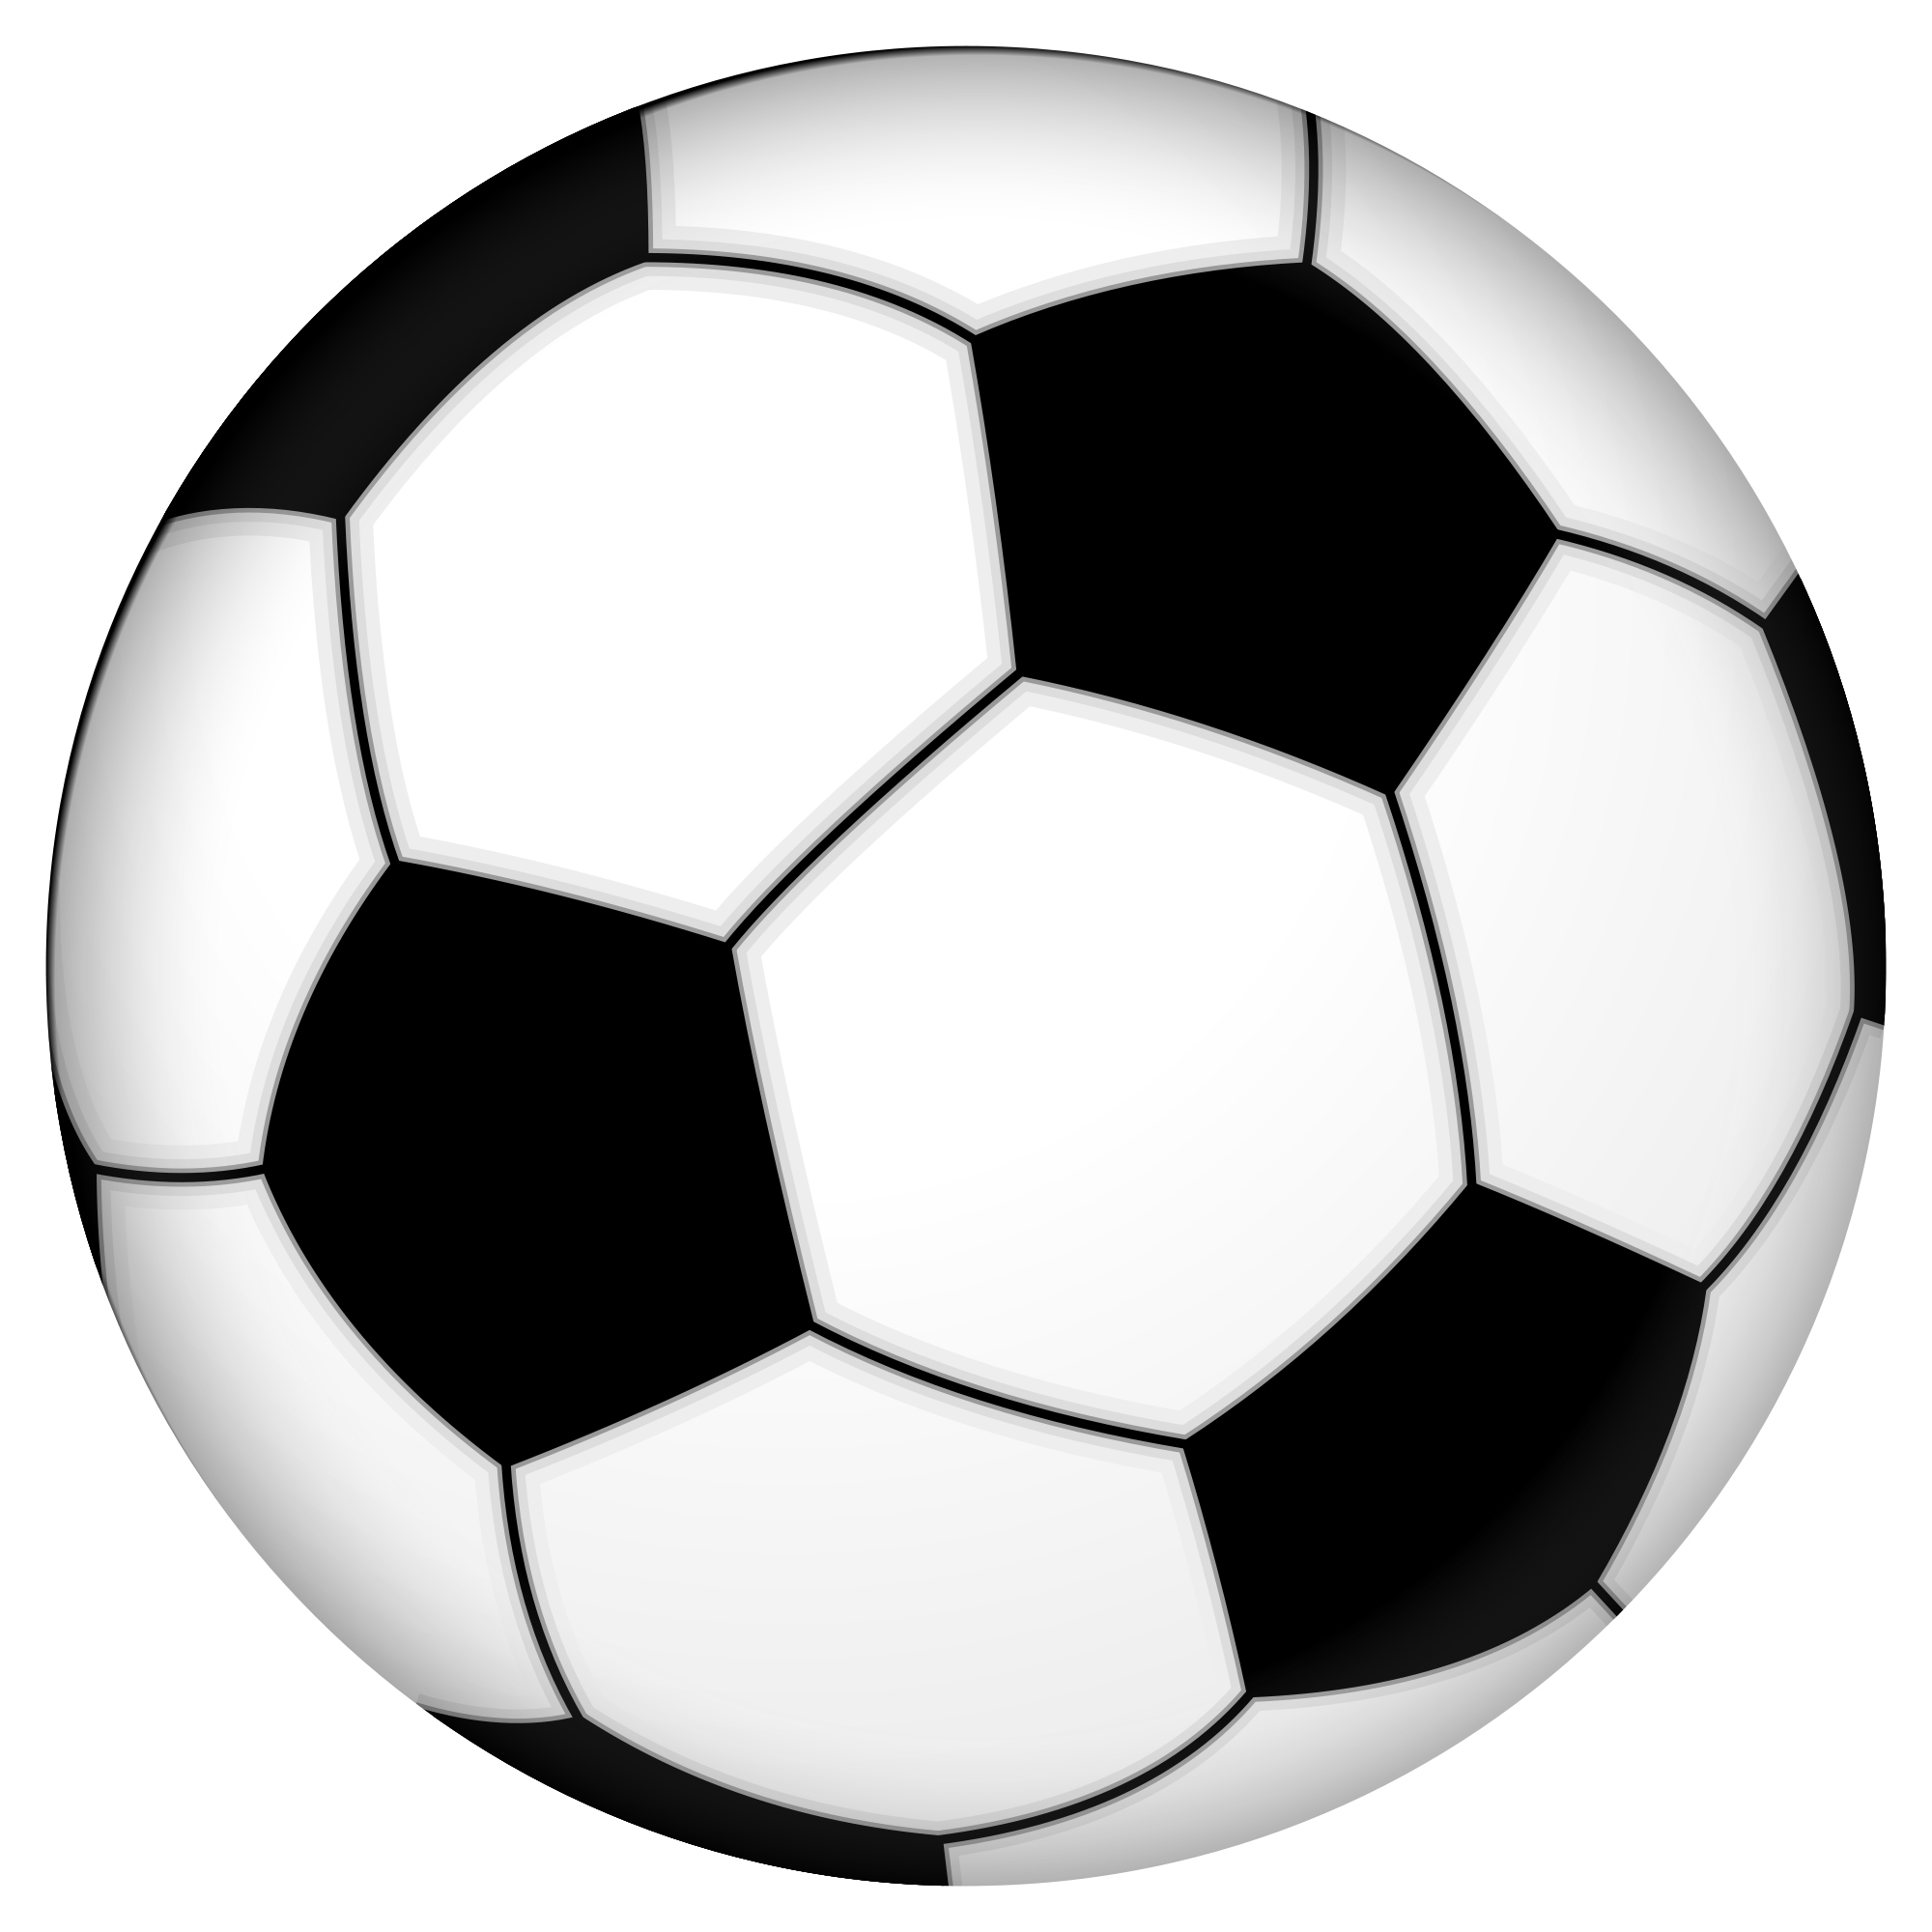 Soccer ball clip art 5